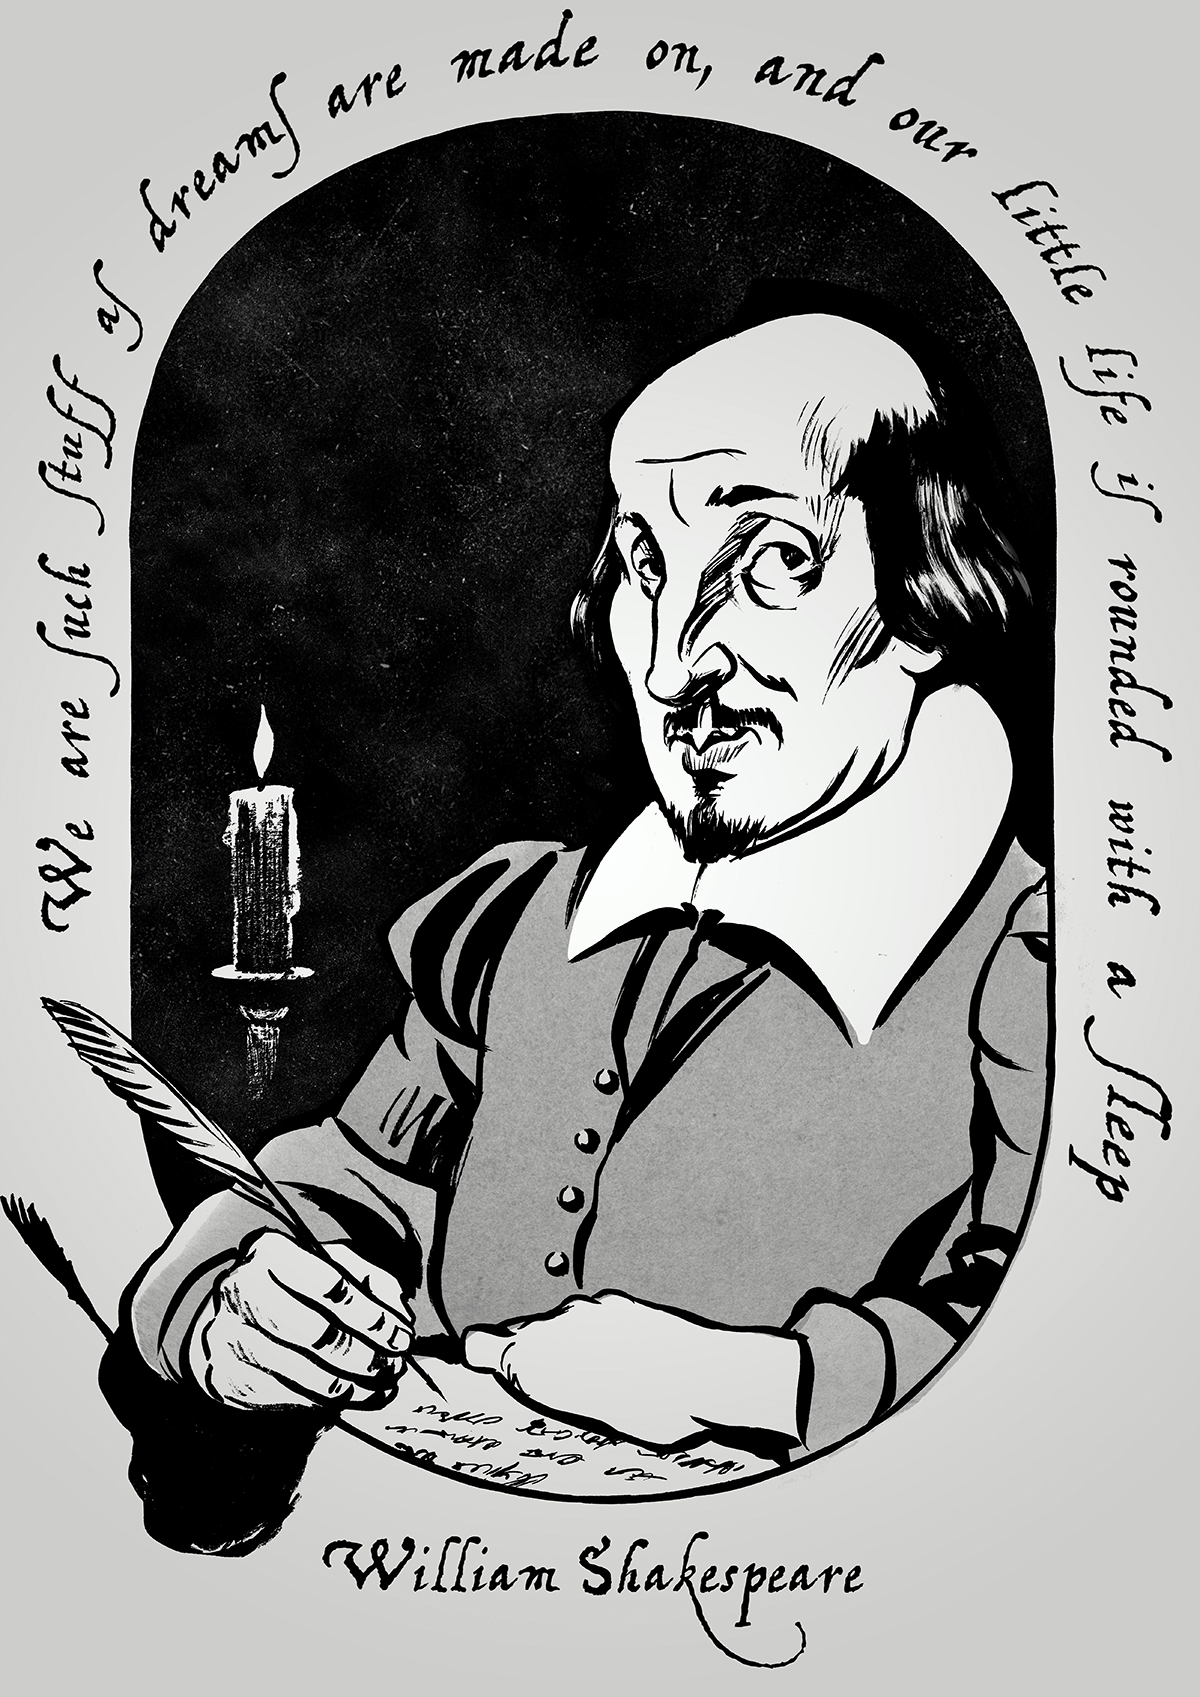 William Shakespeare William Shakespeare - Lowe Ken Lowe Illustration